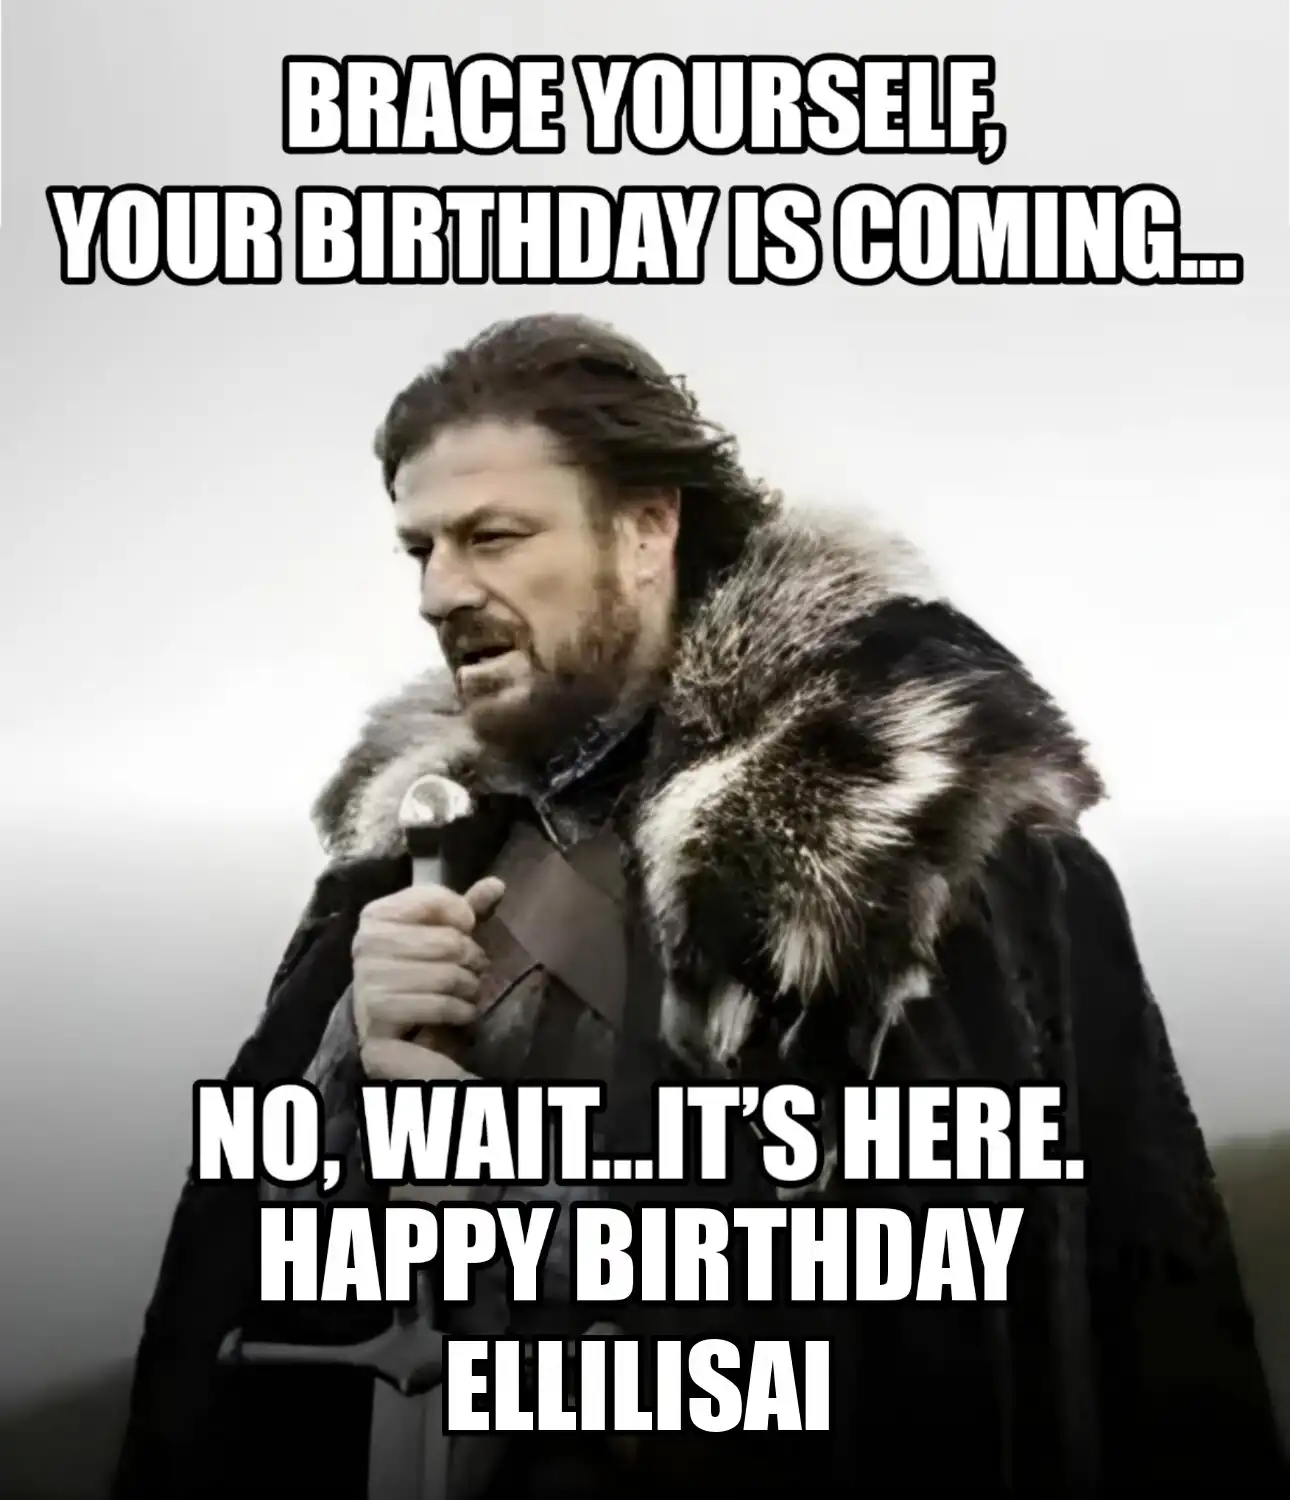 Happy Birthday Ellilisai Brace Yourself Your Birthday Is Coming Meme